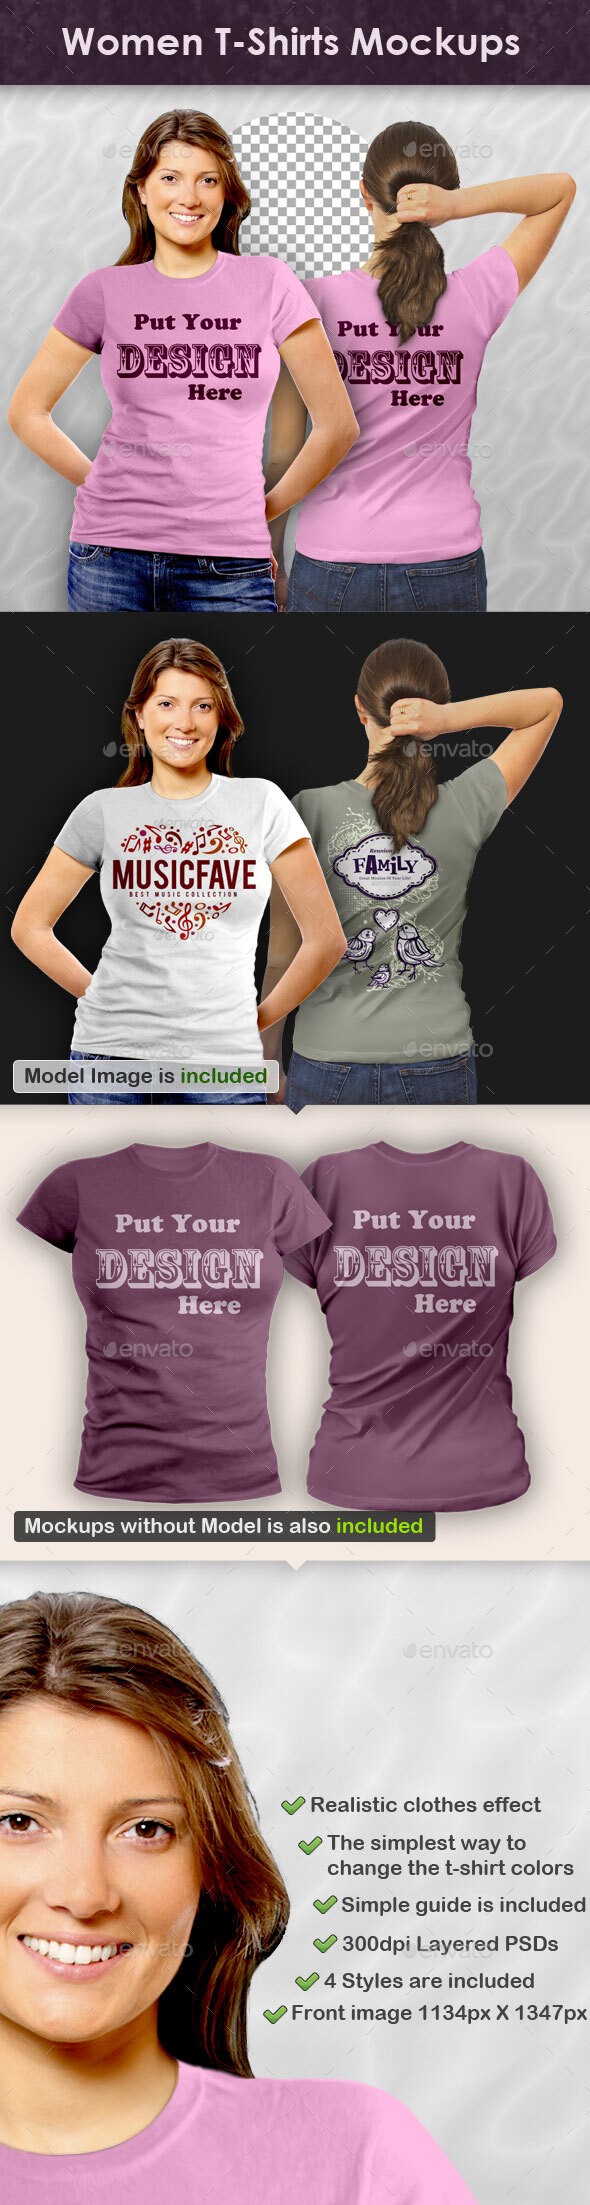 Download T Shirt Mockup Graphics Designs Templates From Graphicriver PSD Mockup Templates